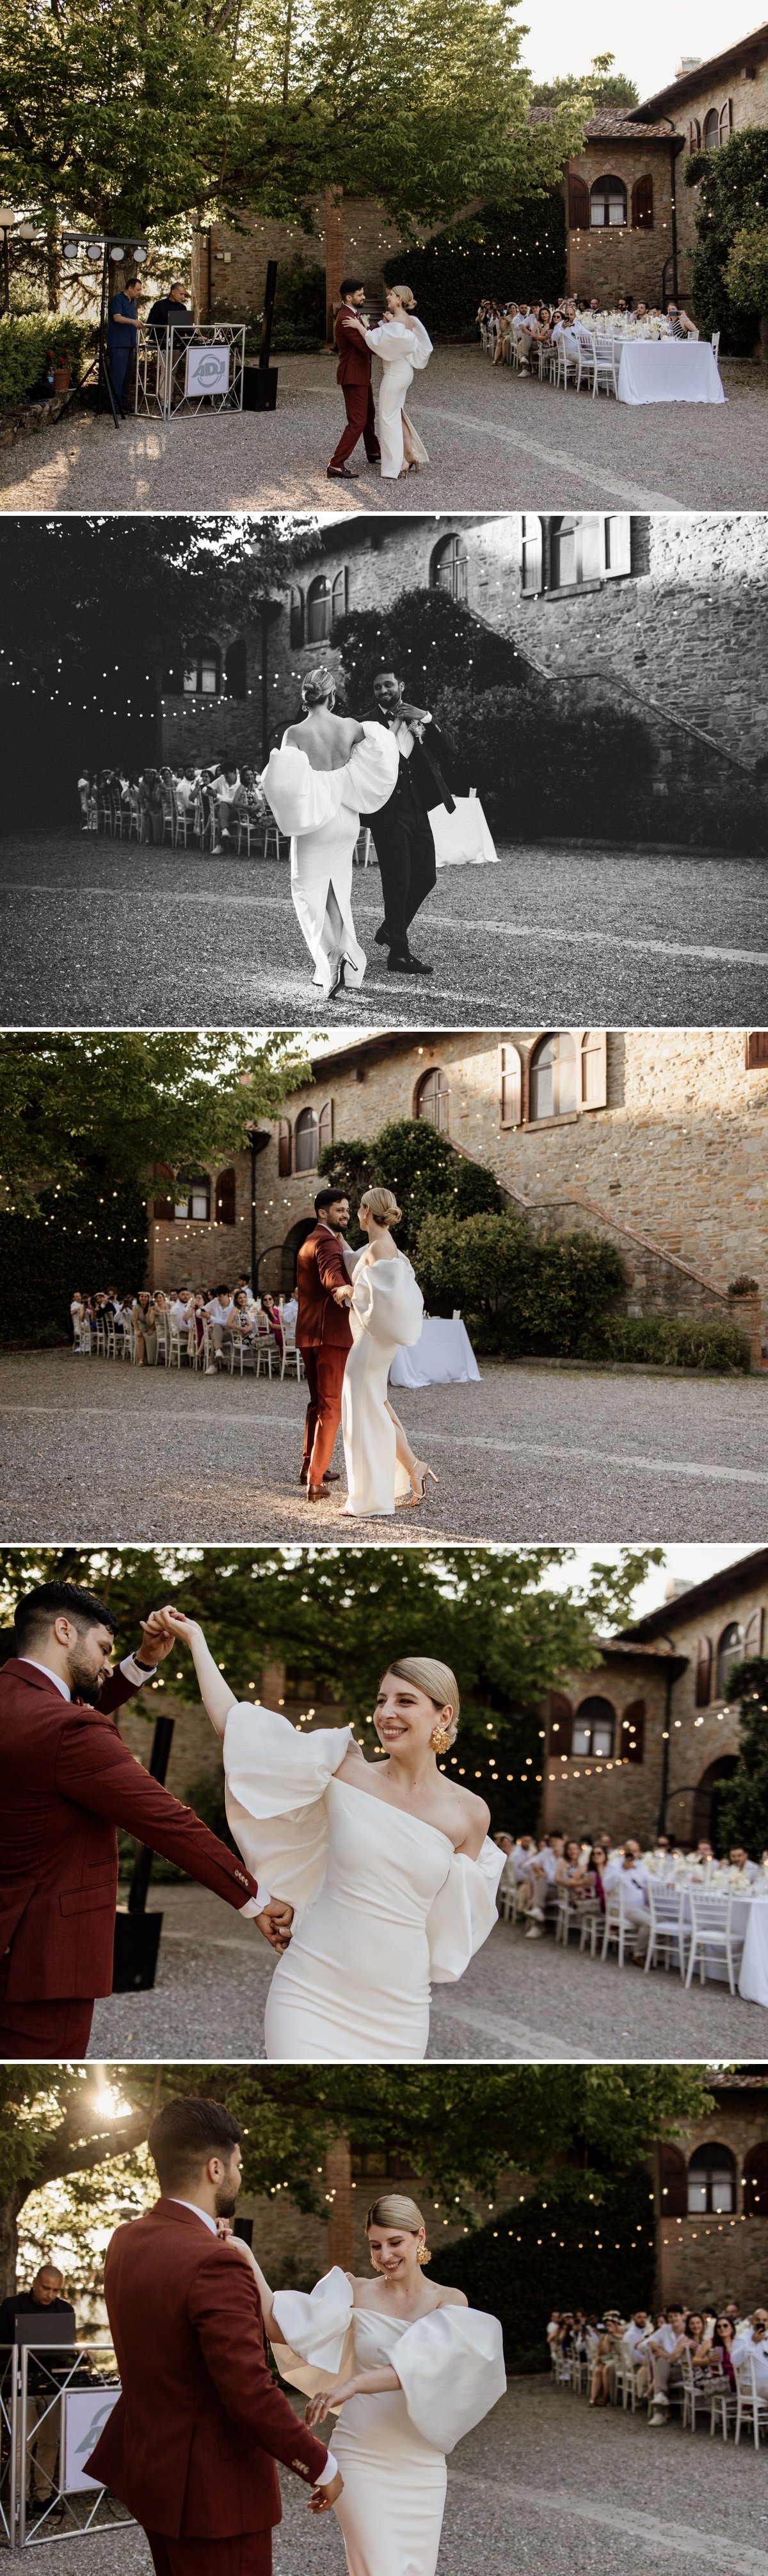 tuscany-wedding-dallk-18.jpg